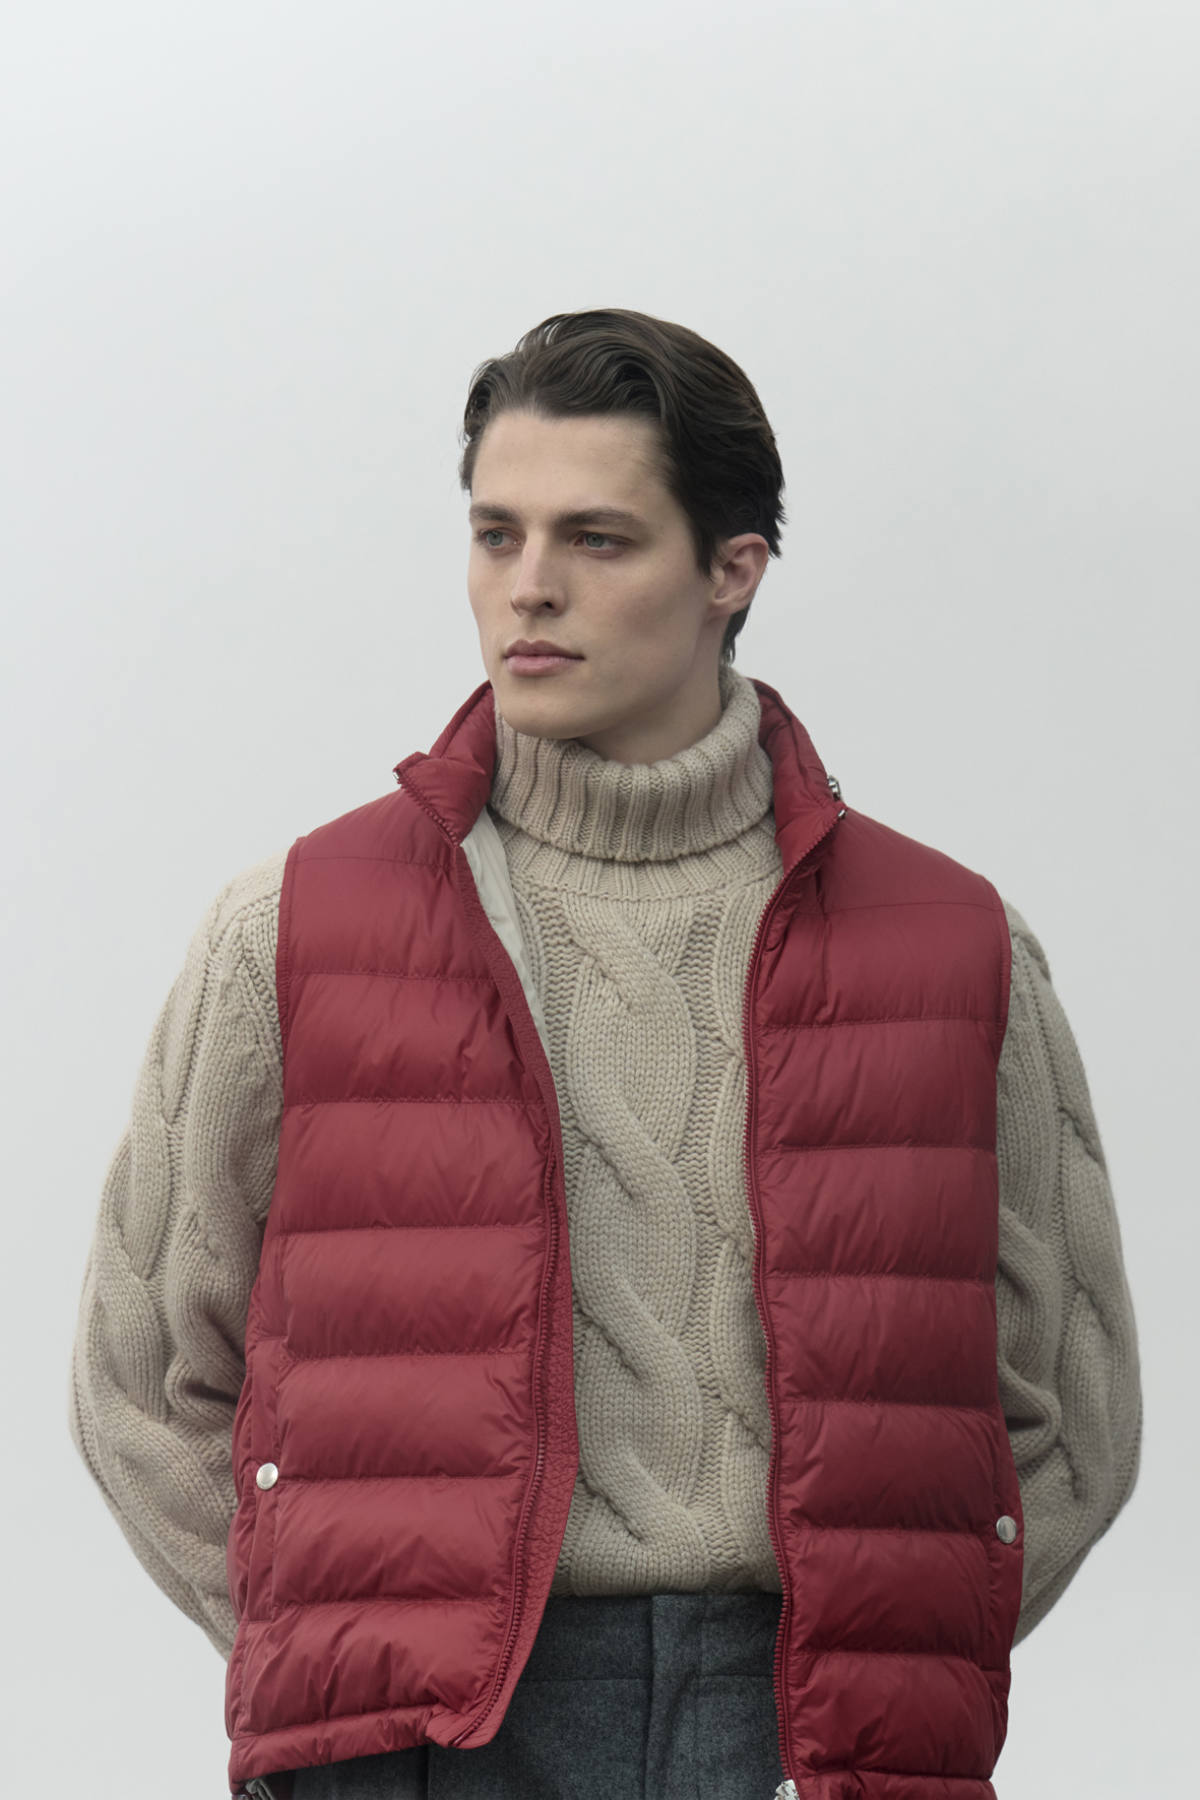 Brunello Cucinelli Presents Its New Fall-Winter 2022 Men’s Collection: Crossroads